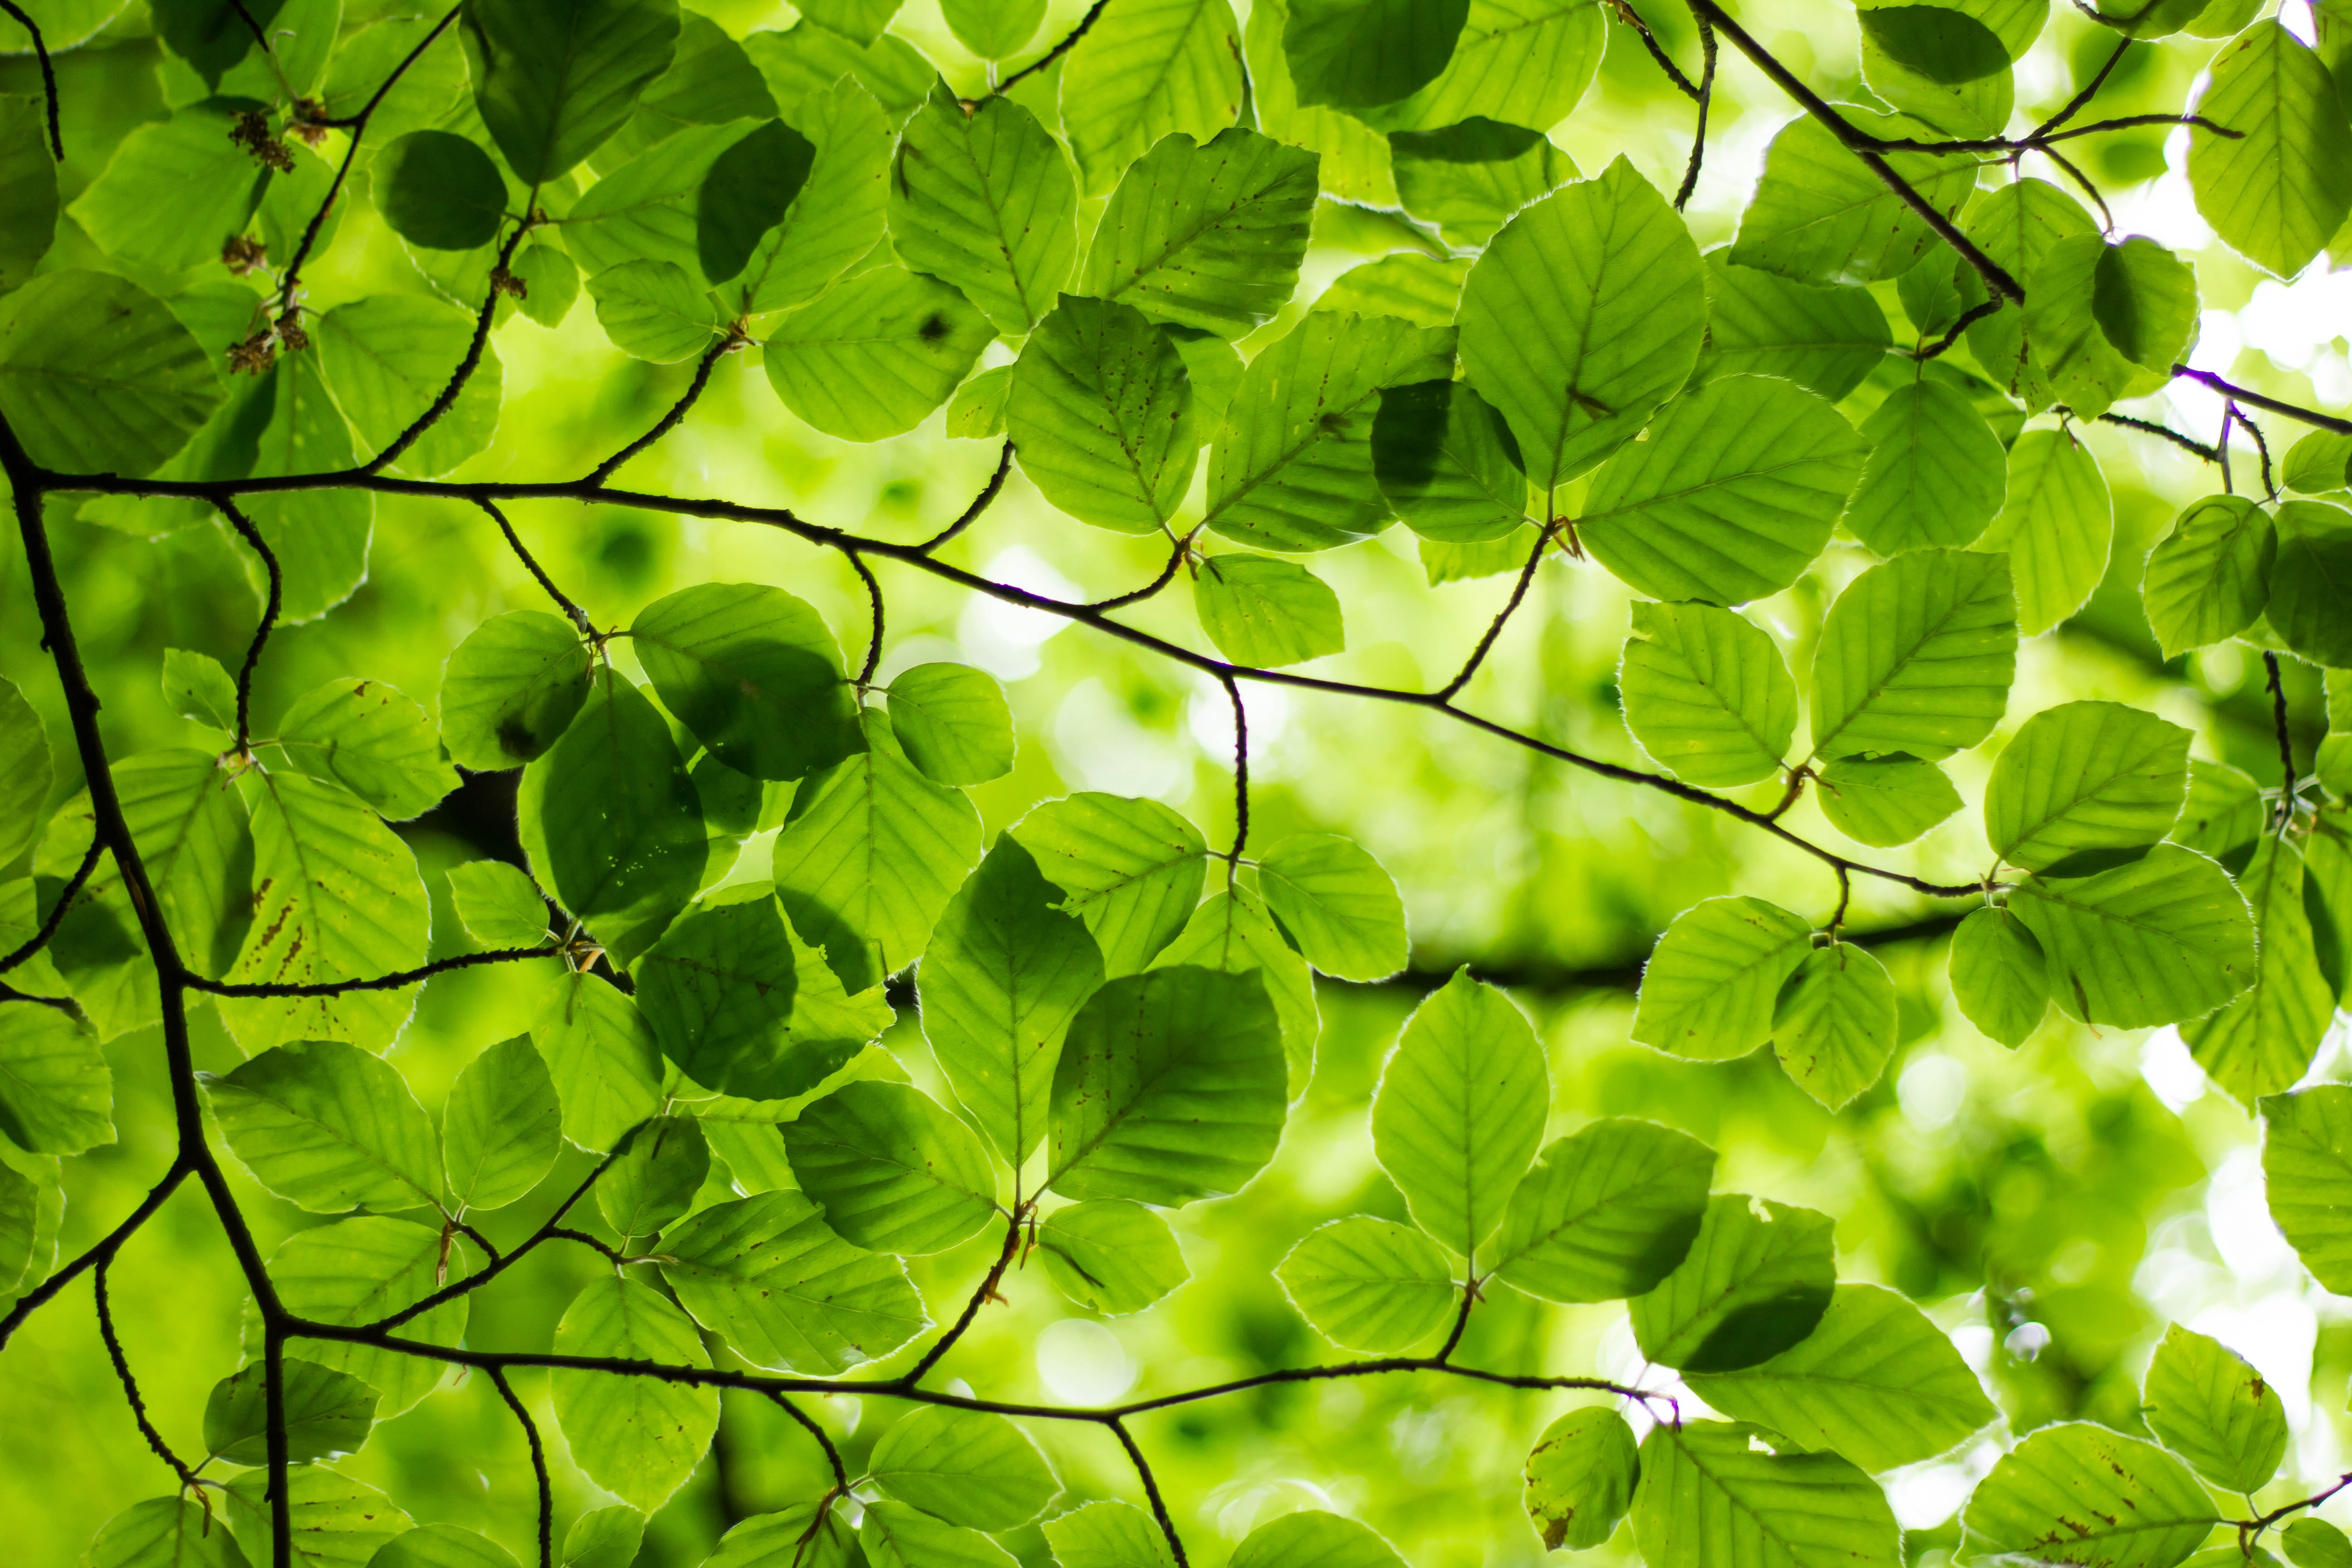 “green leafed plant” by <a href="https://unsplash.com/@modernafflatusphotography?utm_source=medium&amp;utm_medium=referral">Ash from Modern Afflatus</a> on <a href="https://unsplash.com?utm_source=medium&amp;utm_medium=referral">Unsplash</a>